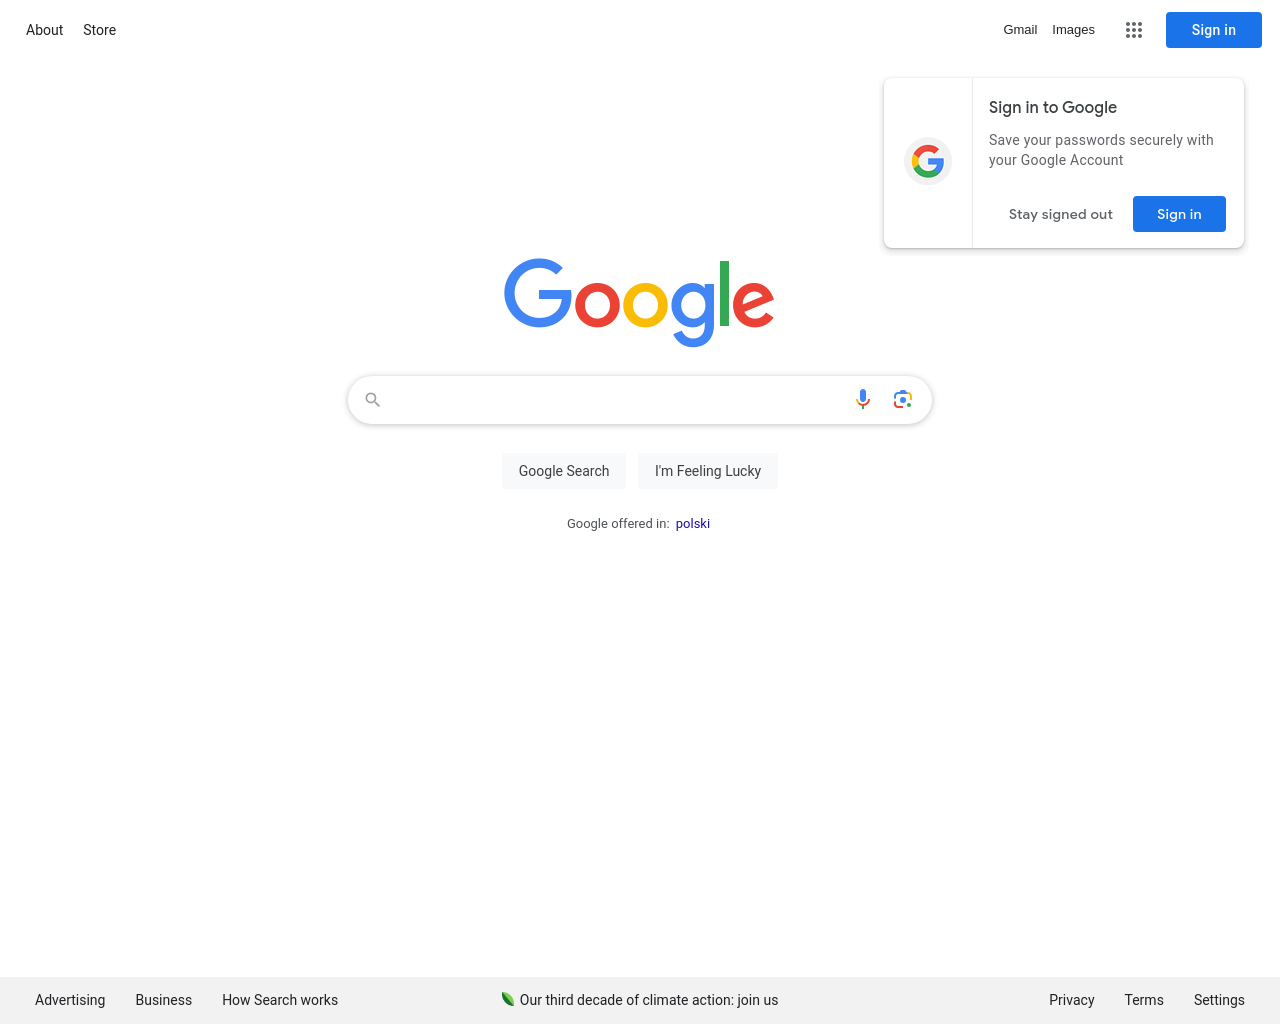 google.pl